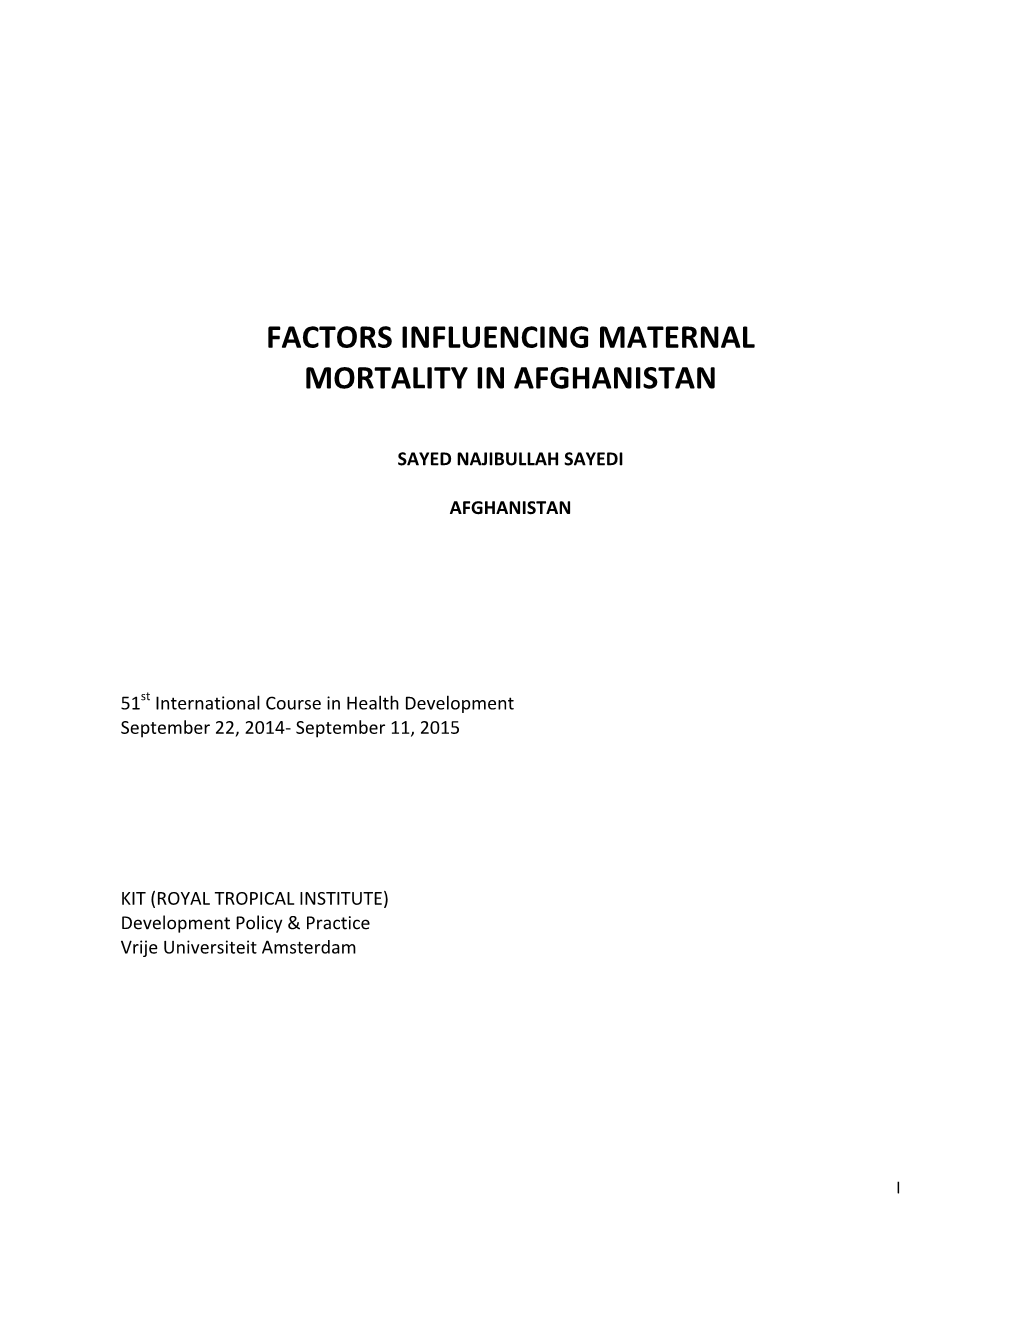 Factors Influencing Maternal Mortality in Afghanistan